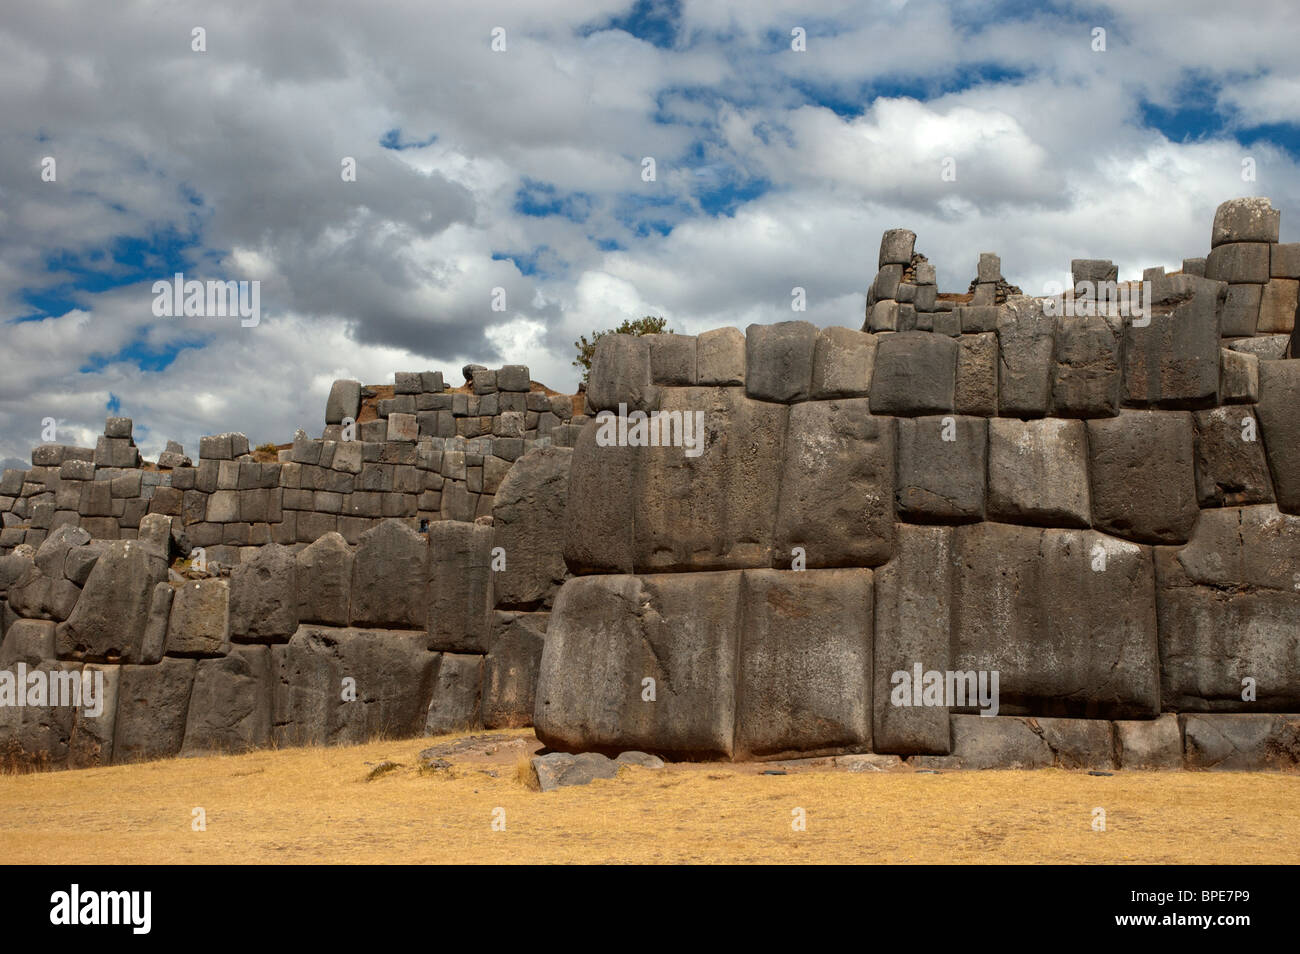 Huge stone walls, at the Inca ruins of Sacsayhuaman, near Cusco, Peru. Stock Photo